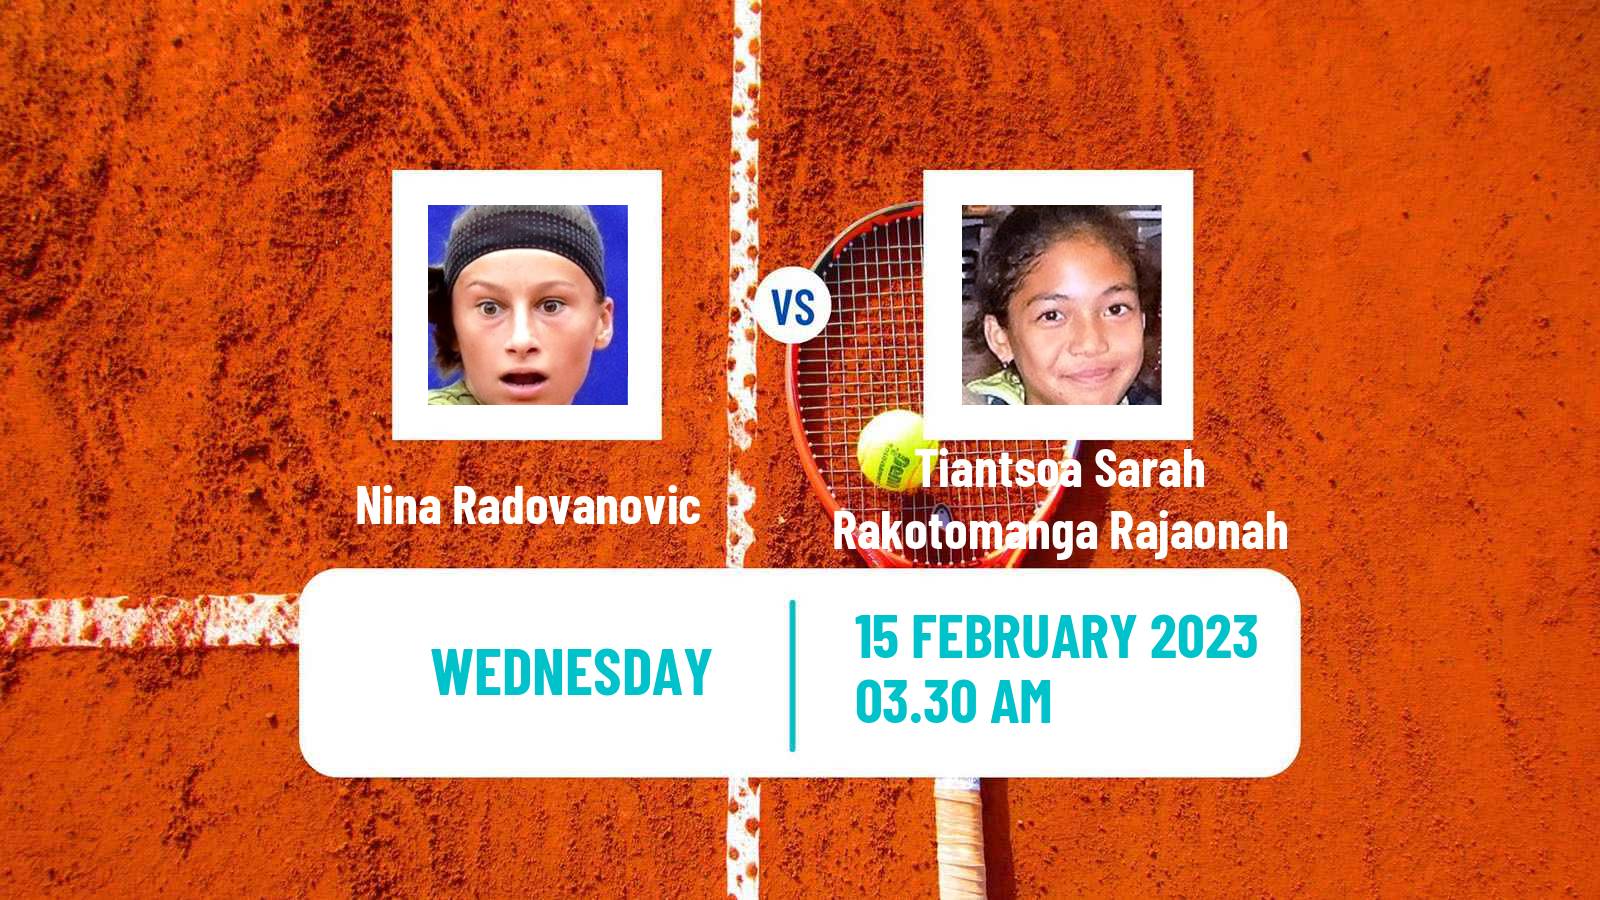 Tennis ITF Tournaments Nina Radovanovic - Tiantsoa Sarah Rakotomanga Rajaonah